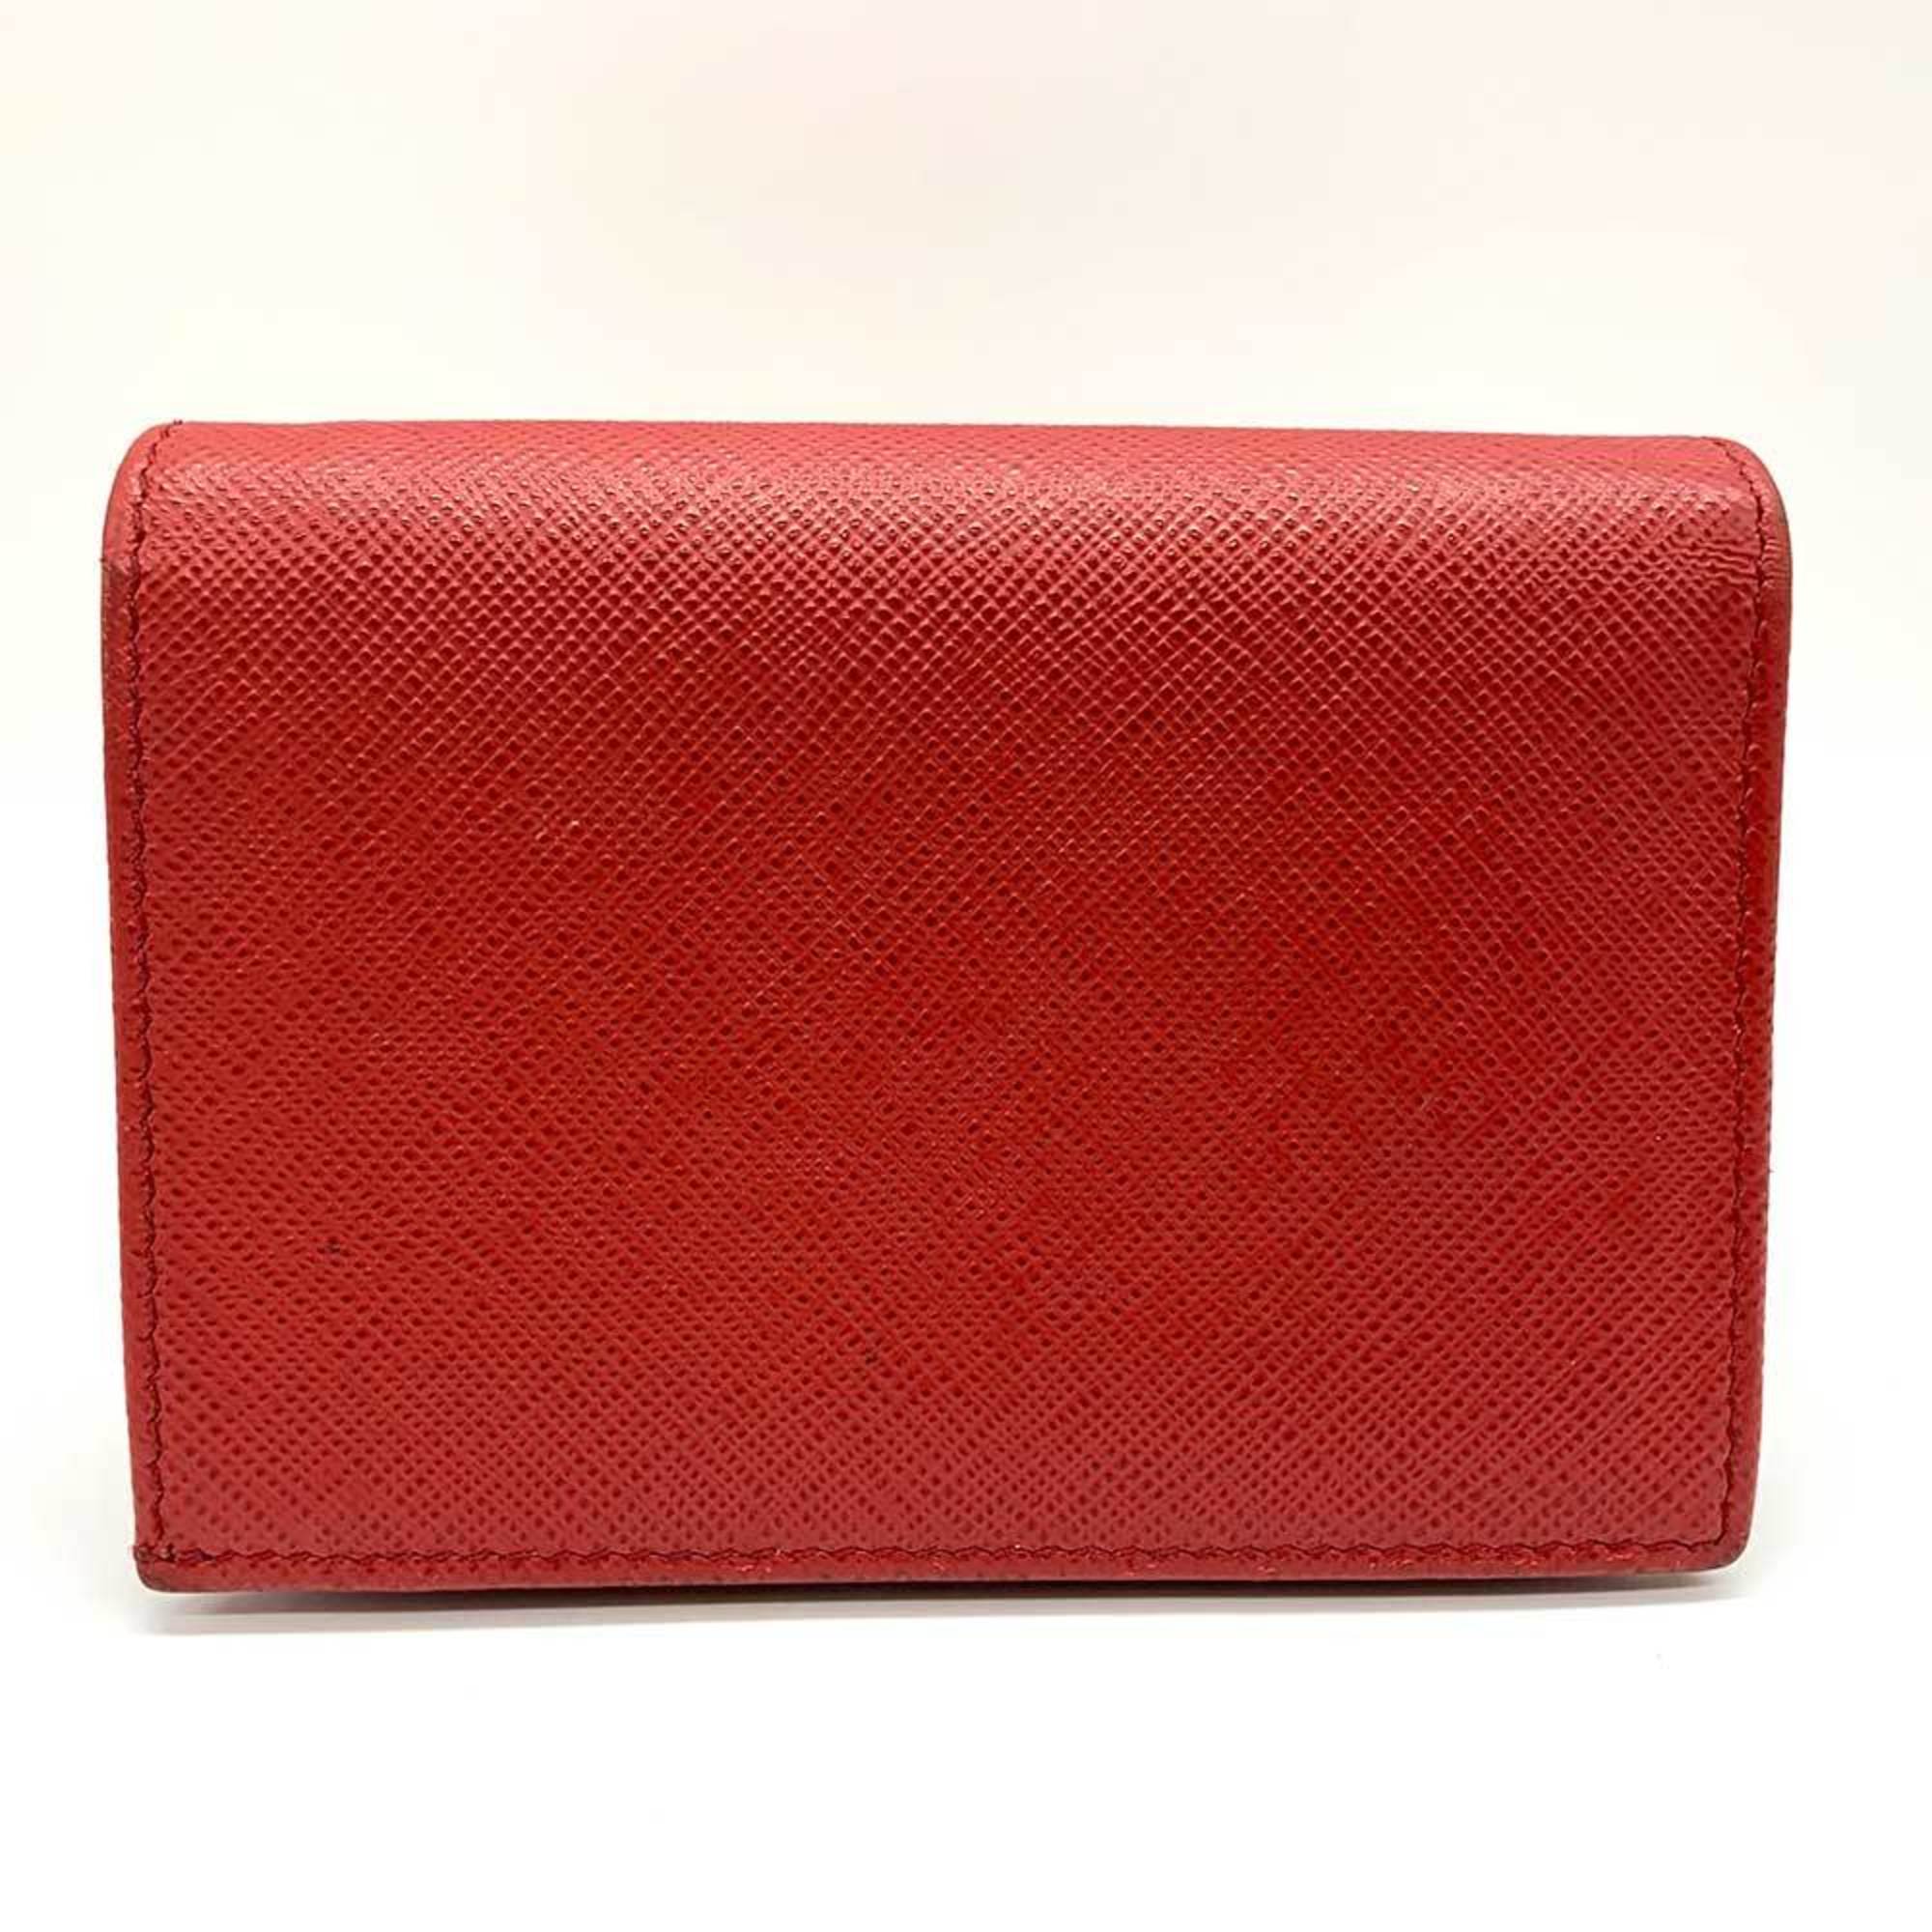 Prada Wallet Red Leather Bifold PRADA 1MV021 Ladies